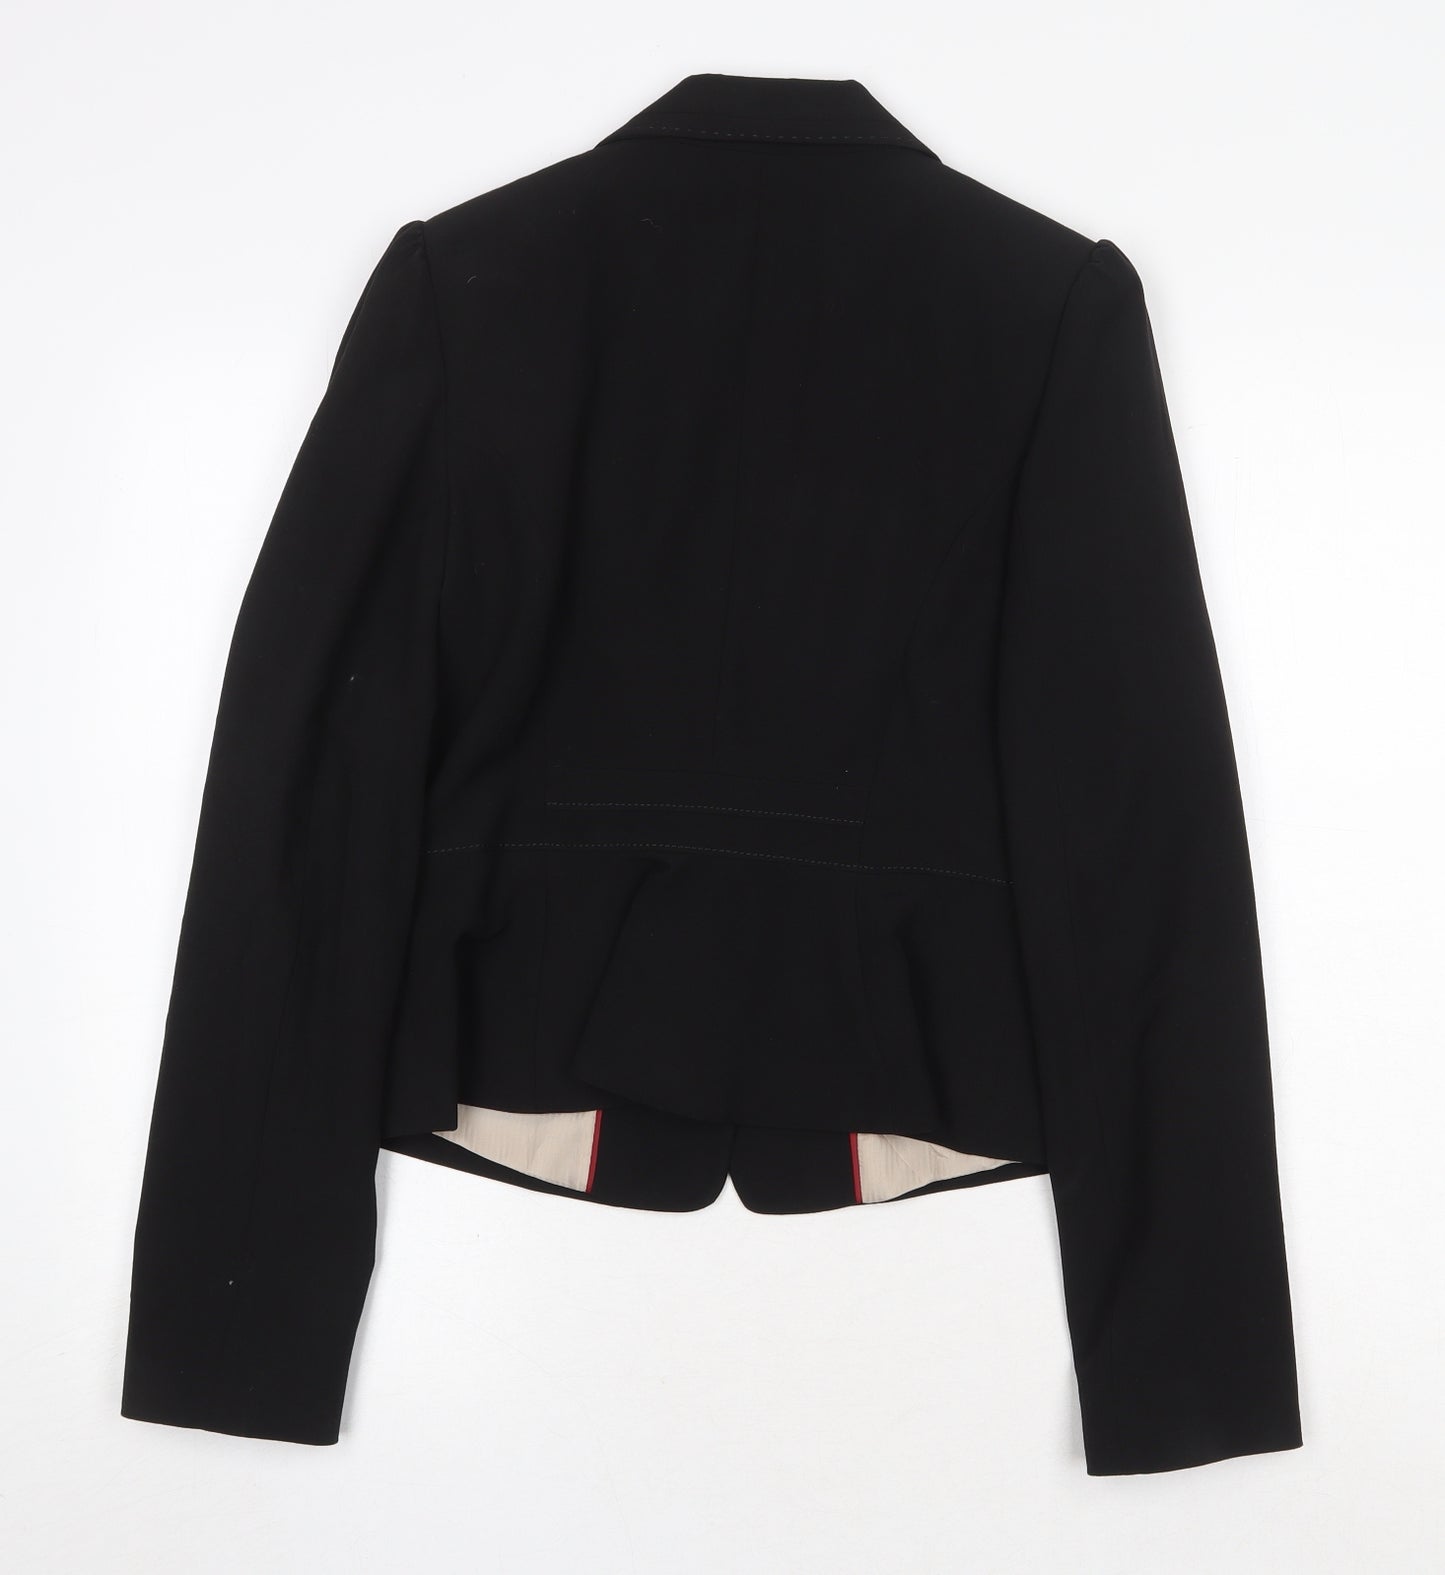 New Look Womens Black Polyester Jacket Blazer Size 12